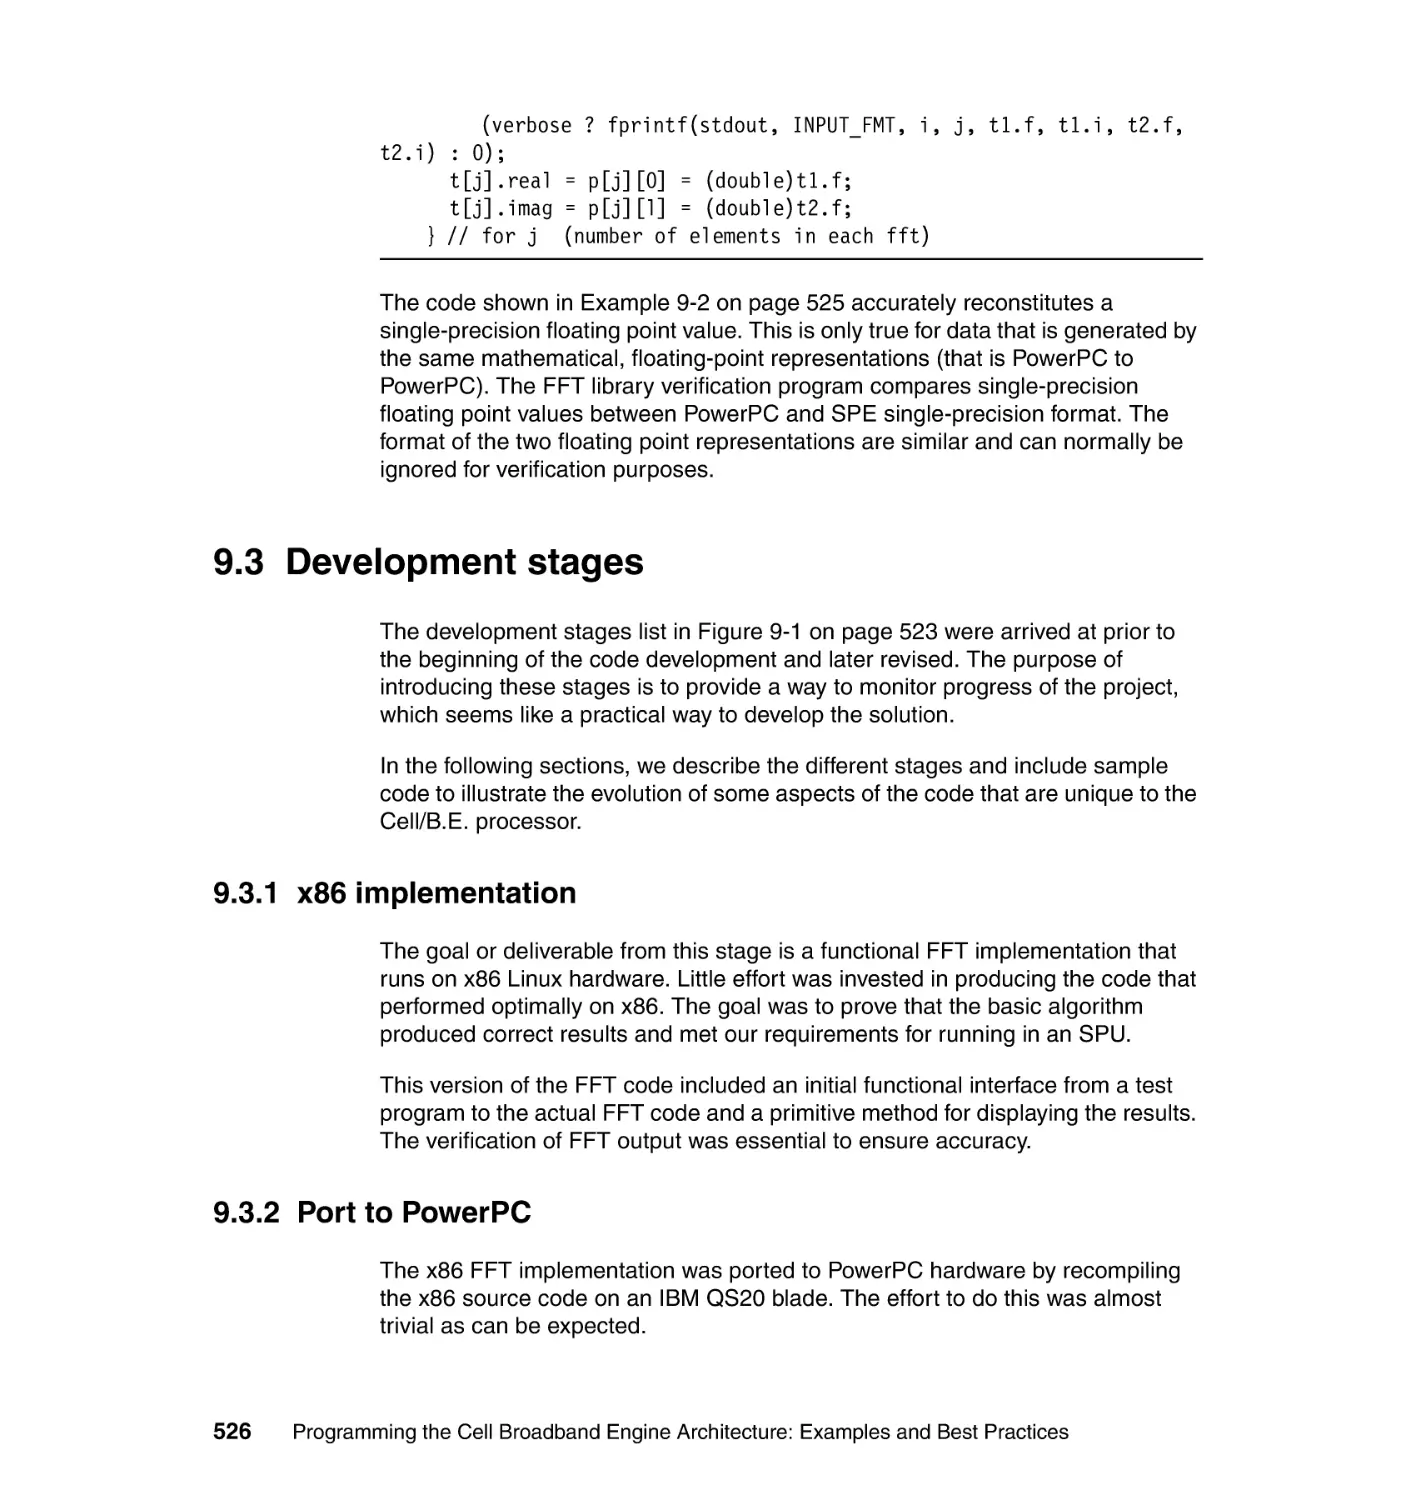 9.3 Development stages
9.3.1 x86 implementation
9.3.2 Port to PowerPC